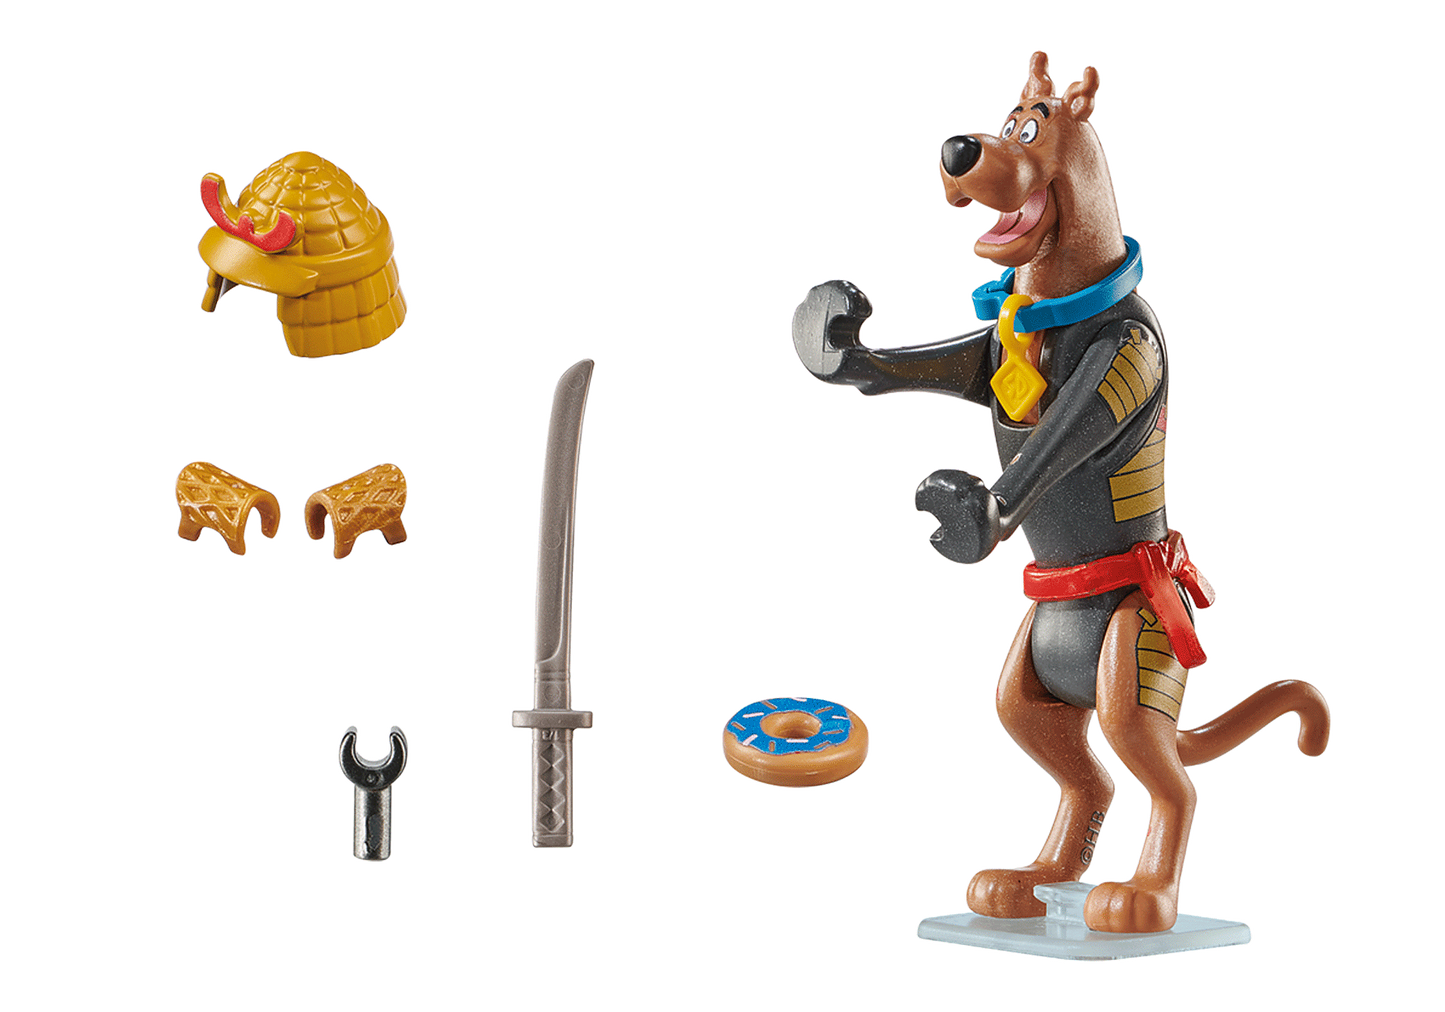 Playmobil #70716 Scooby-Doo! Collectible Samurai Figure